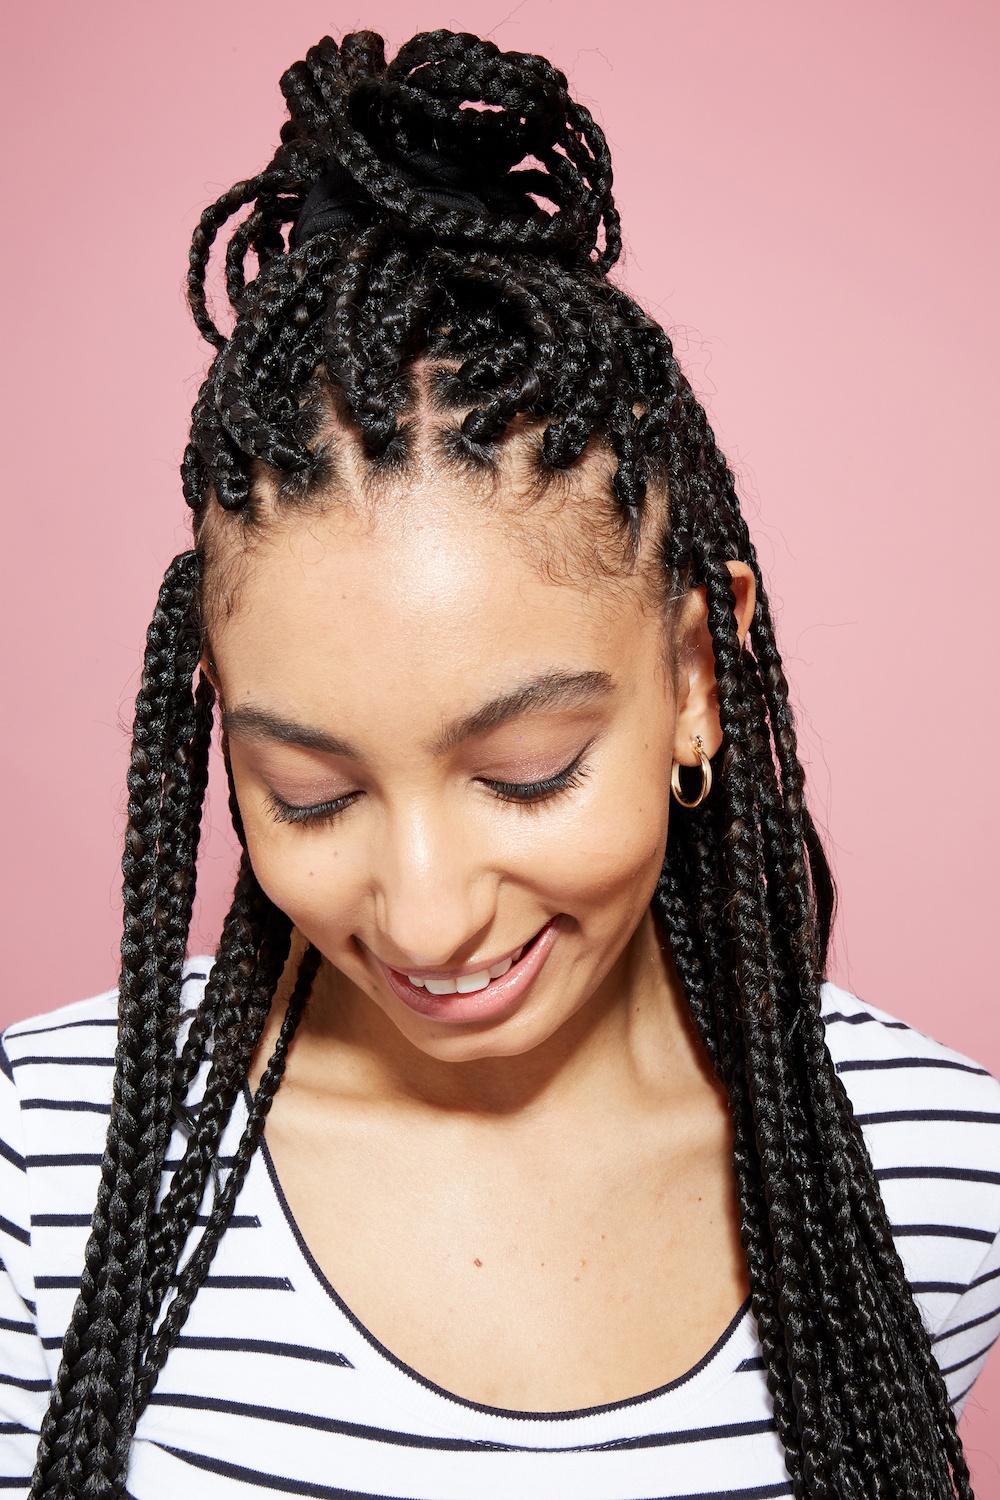 New Braided Hairstyles for Black Women : Best Hair Braids to Try |  Zaineey's Blog